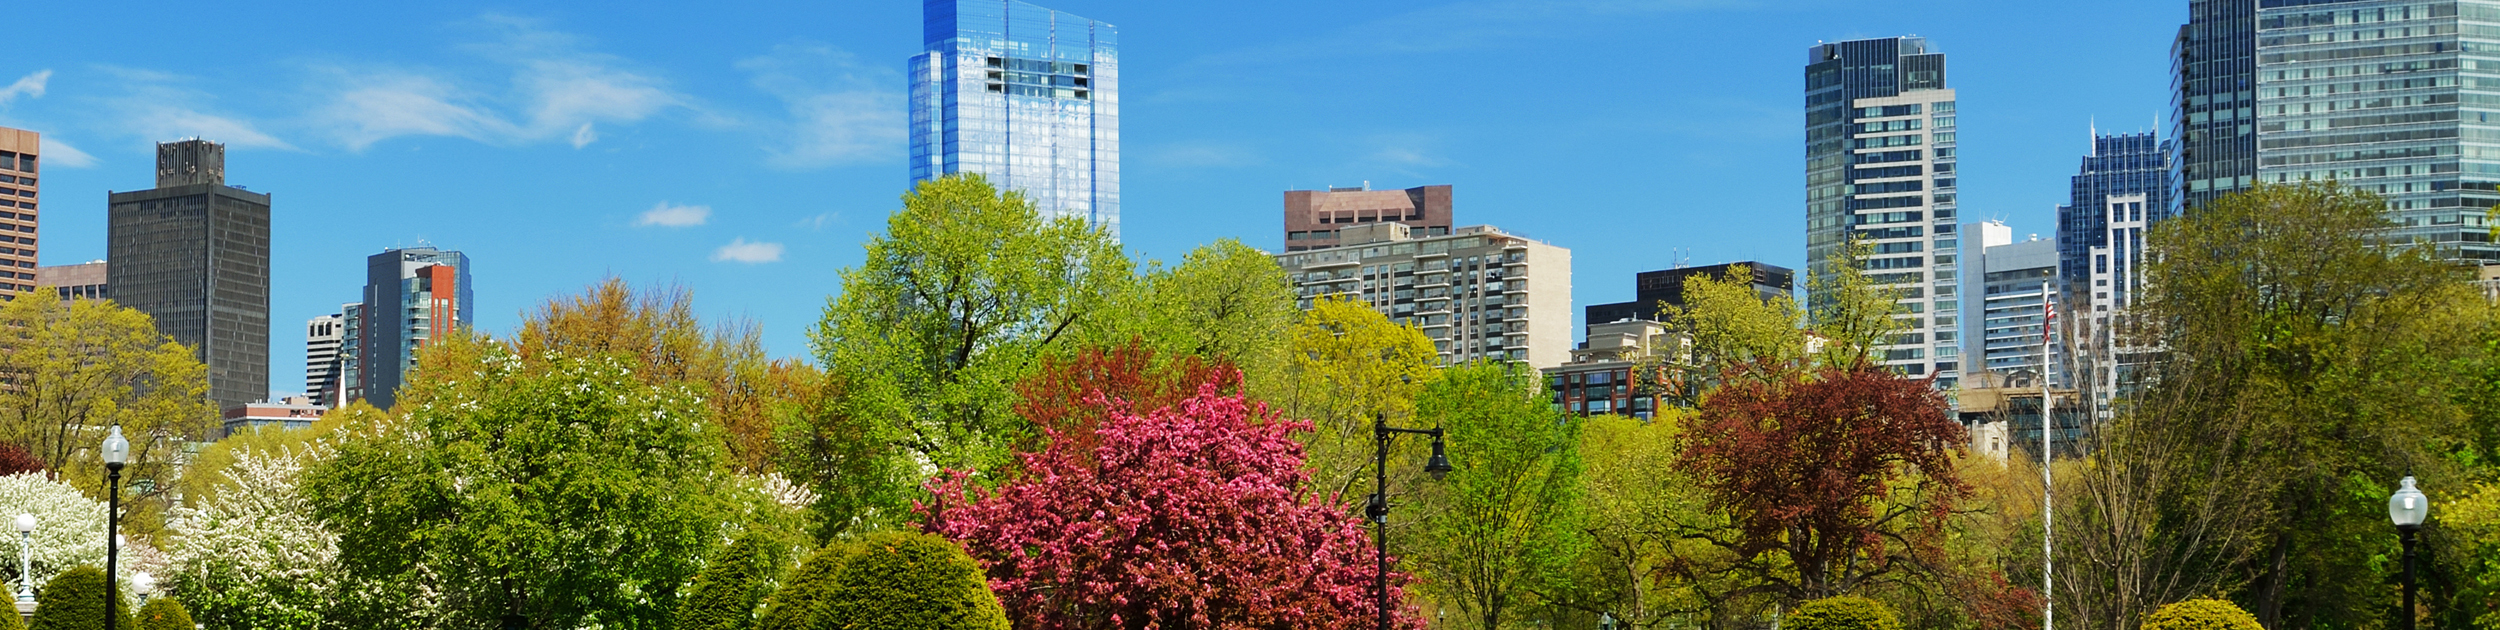 Boston skyline shown above beautiful Spring bushes